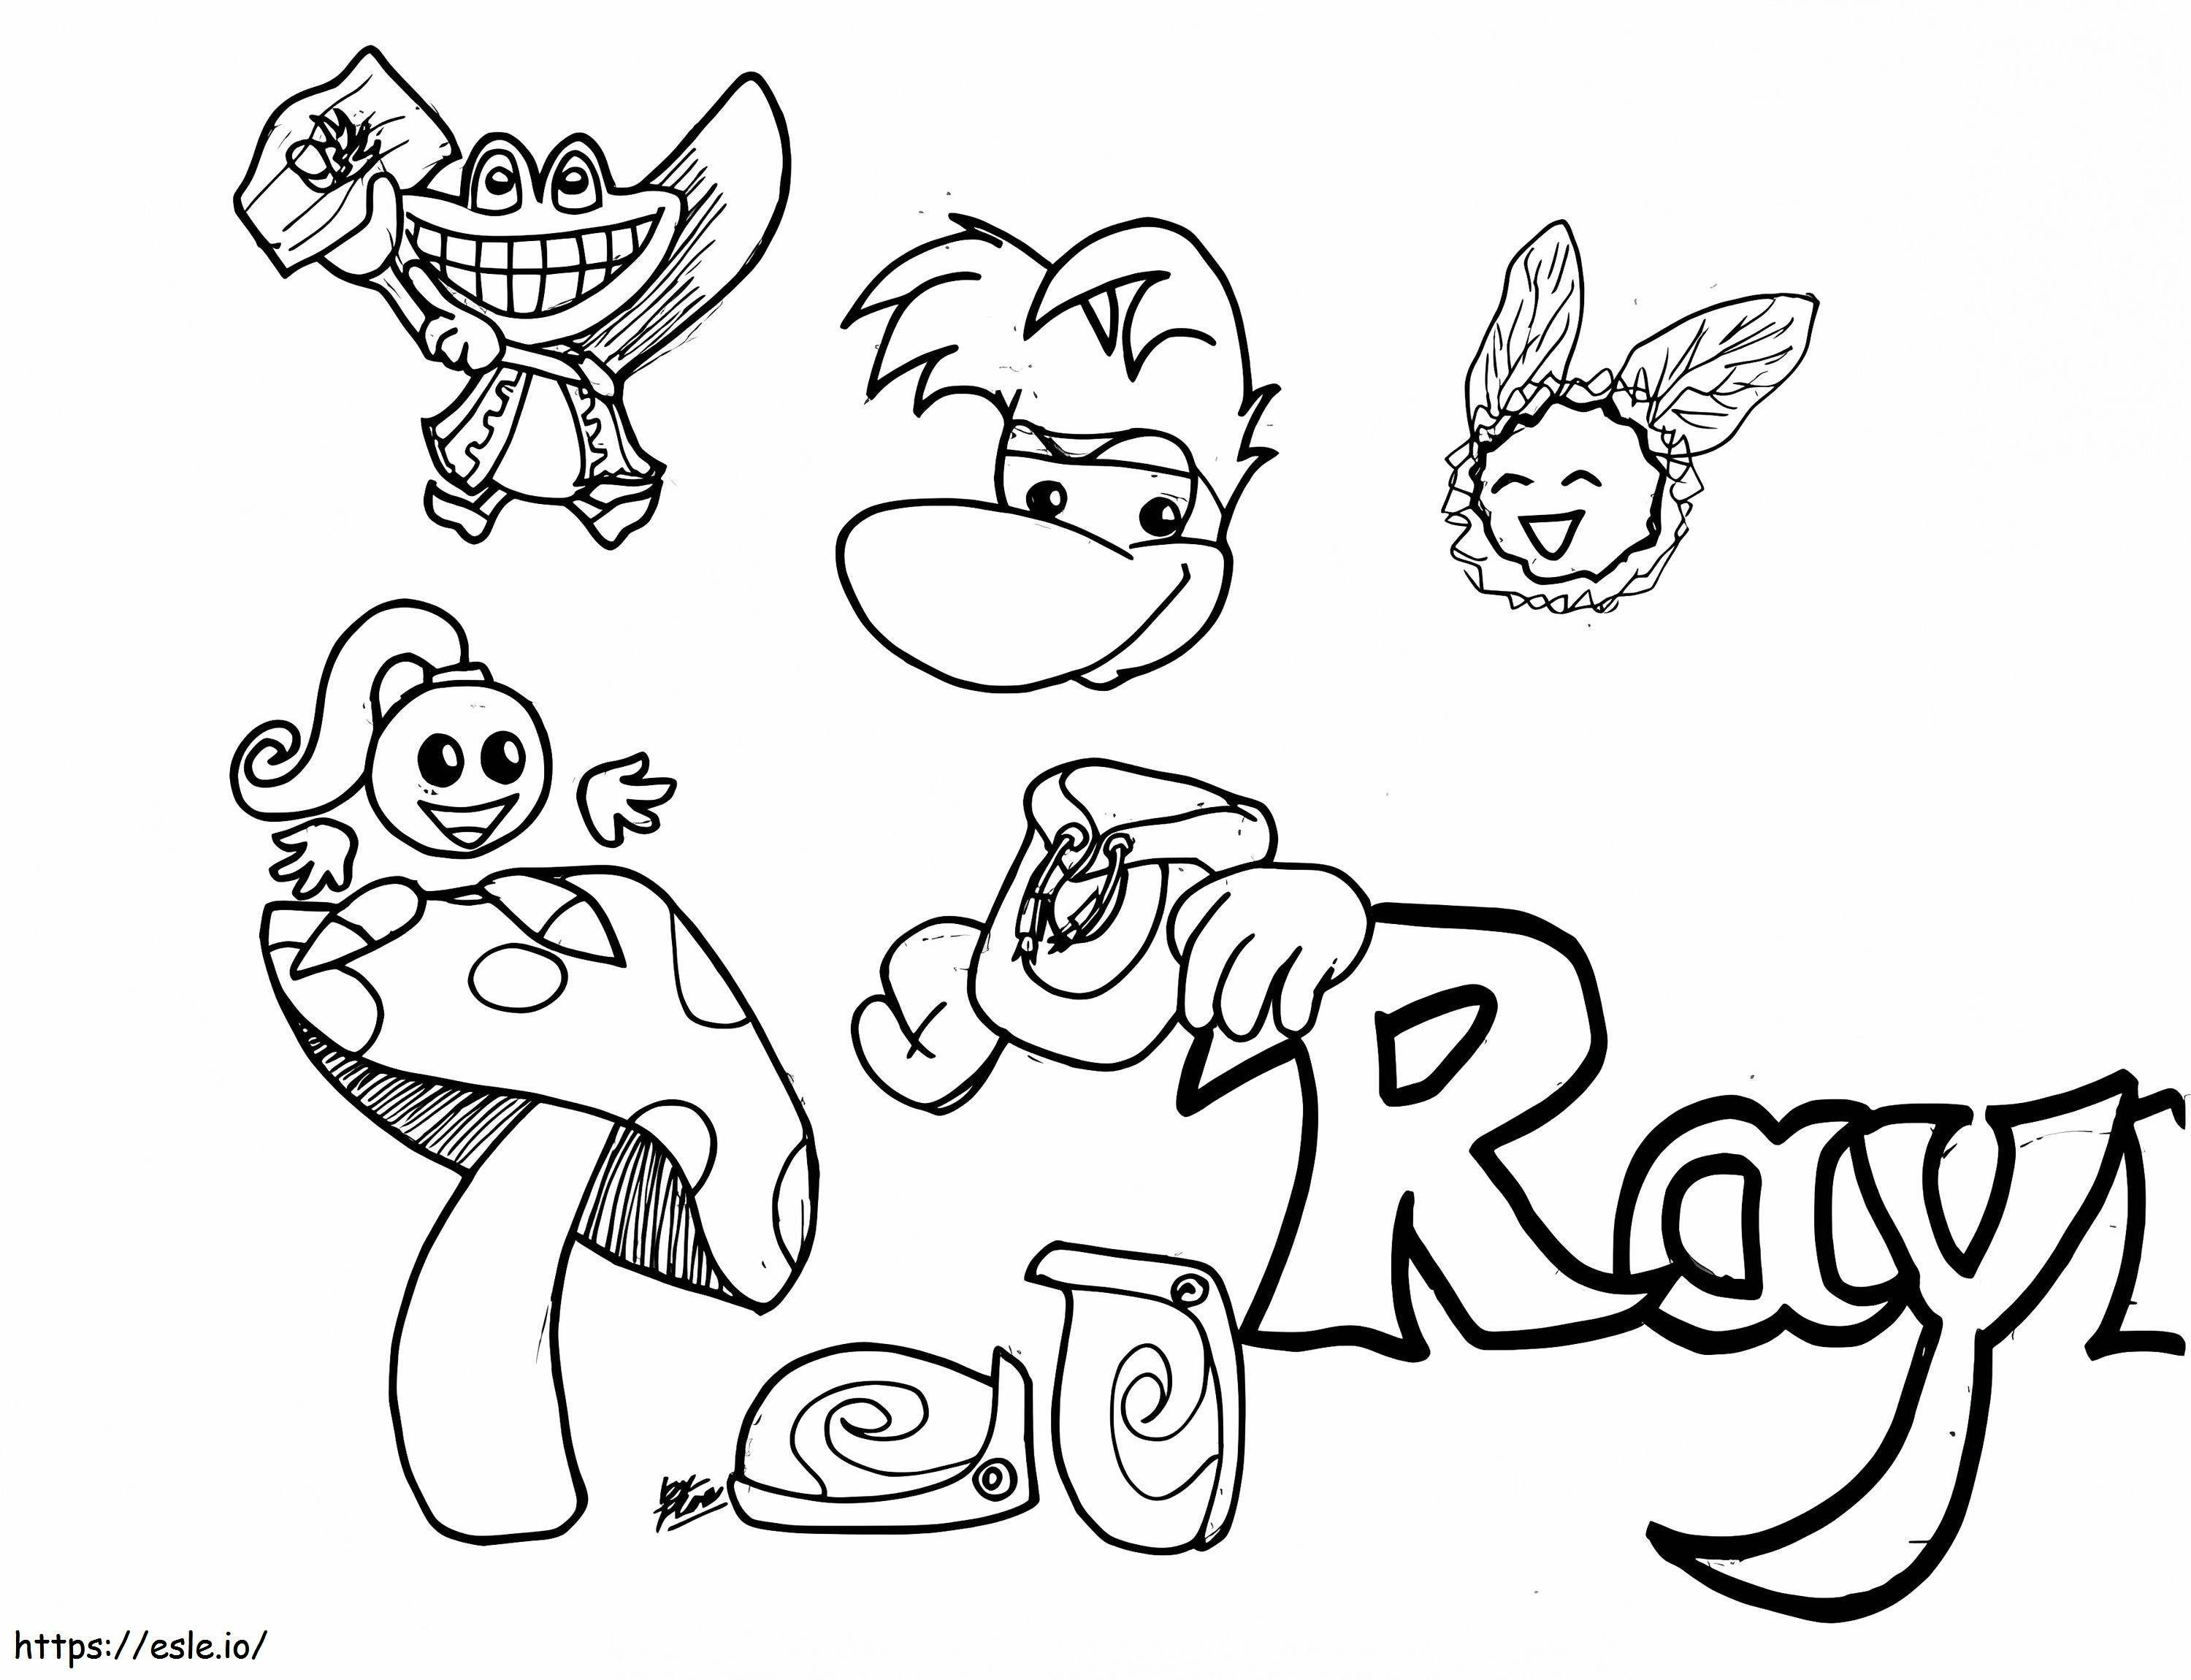 Rayman para impressão para colorir